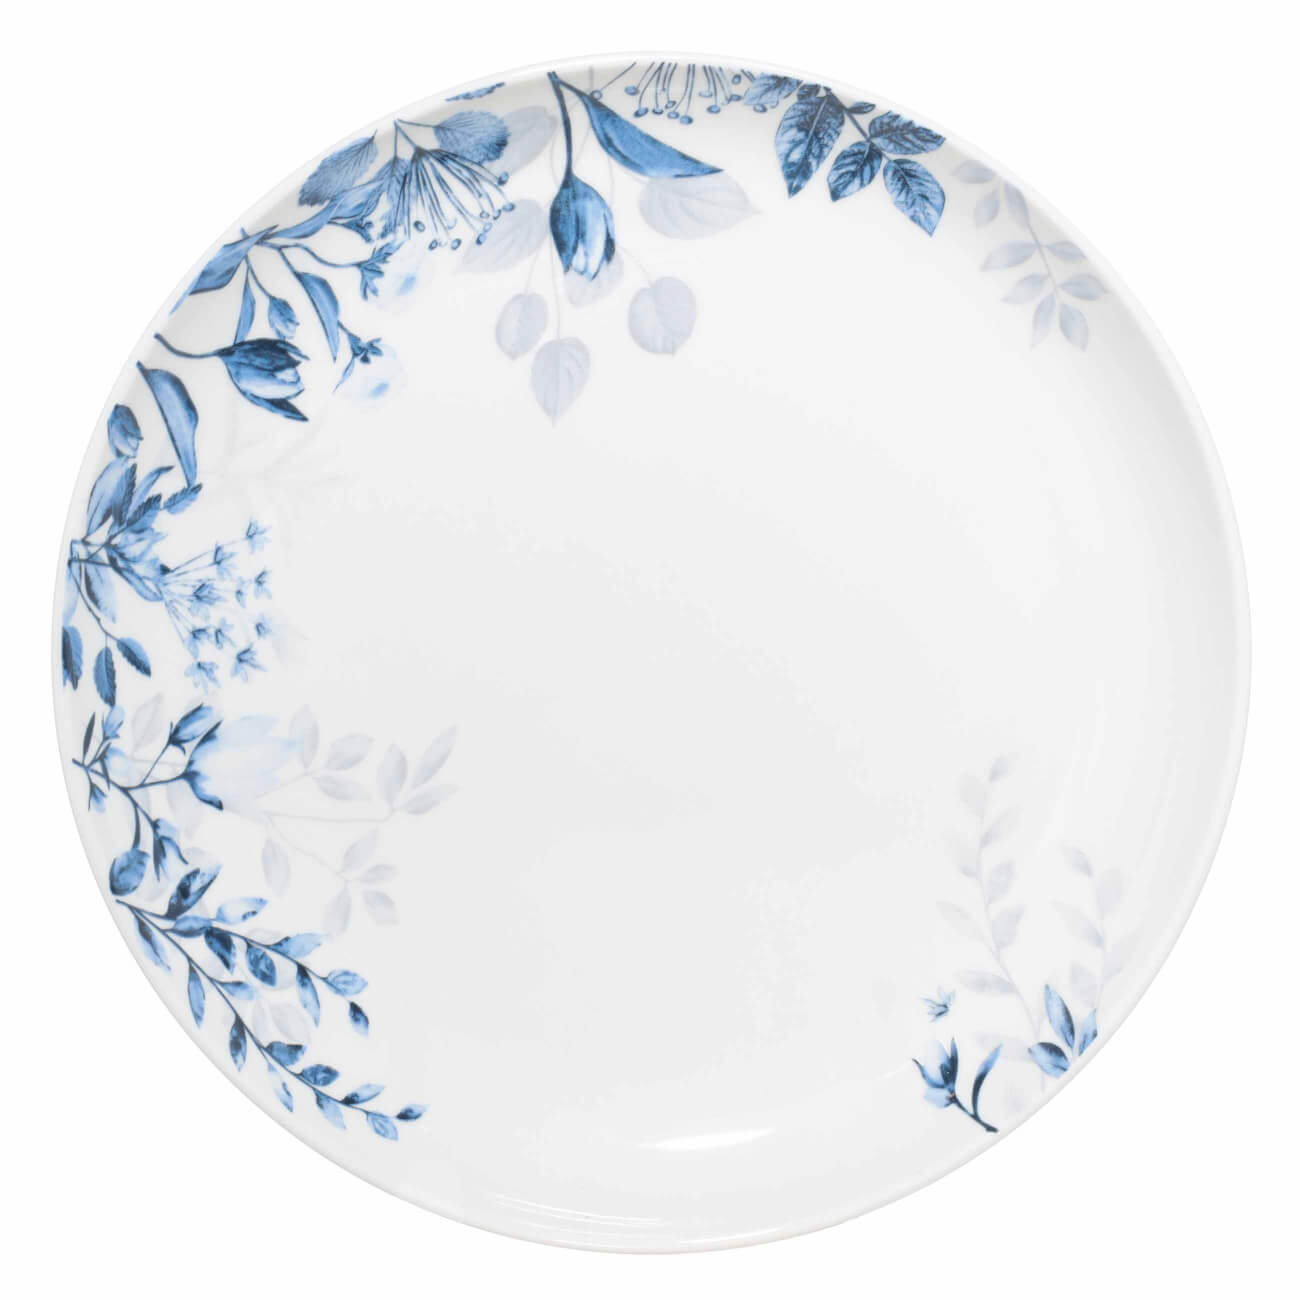 Тарелка обеденная, 27 см, фарфор N, белая, Синие цветы, Royal flower - фото 1